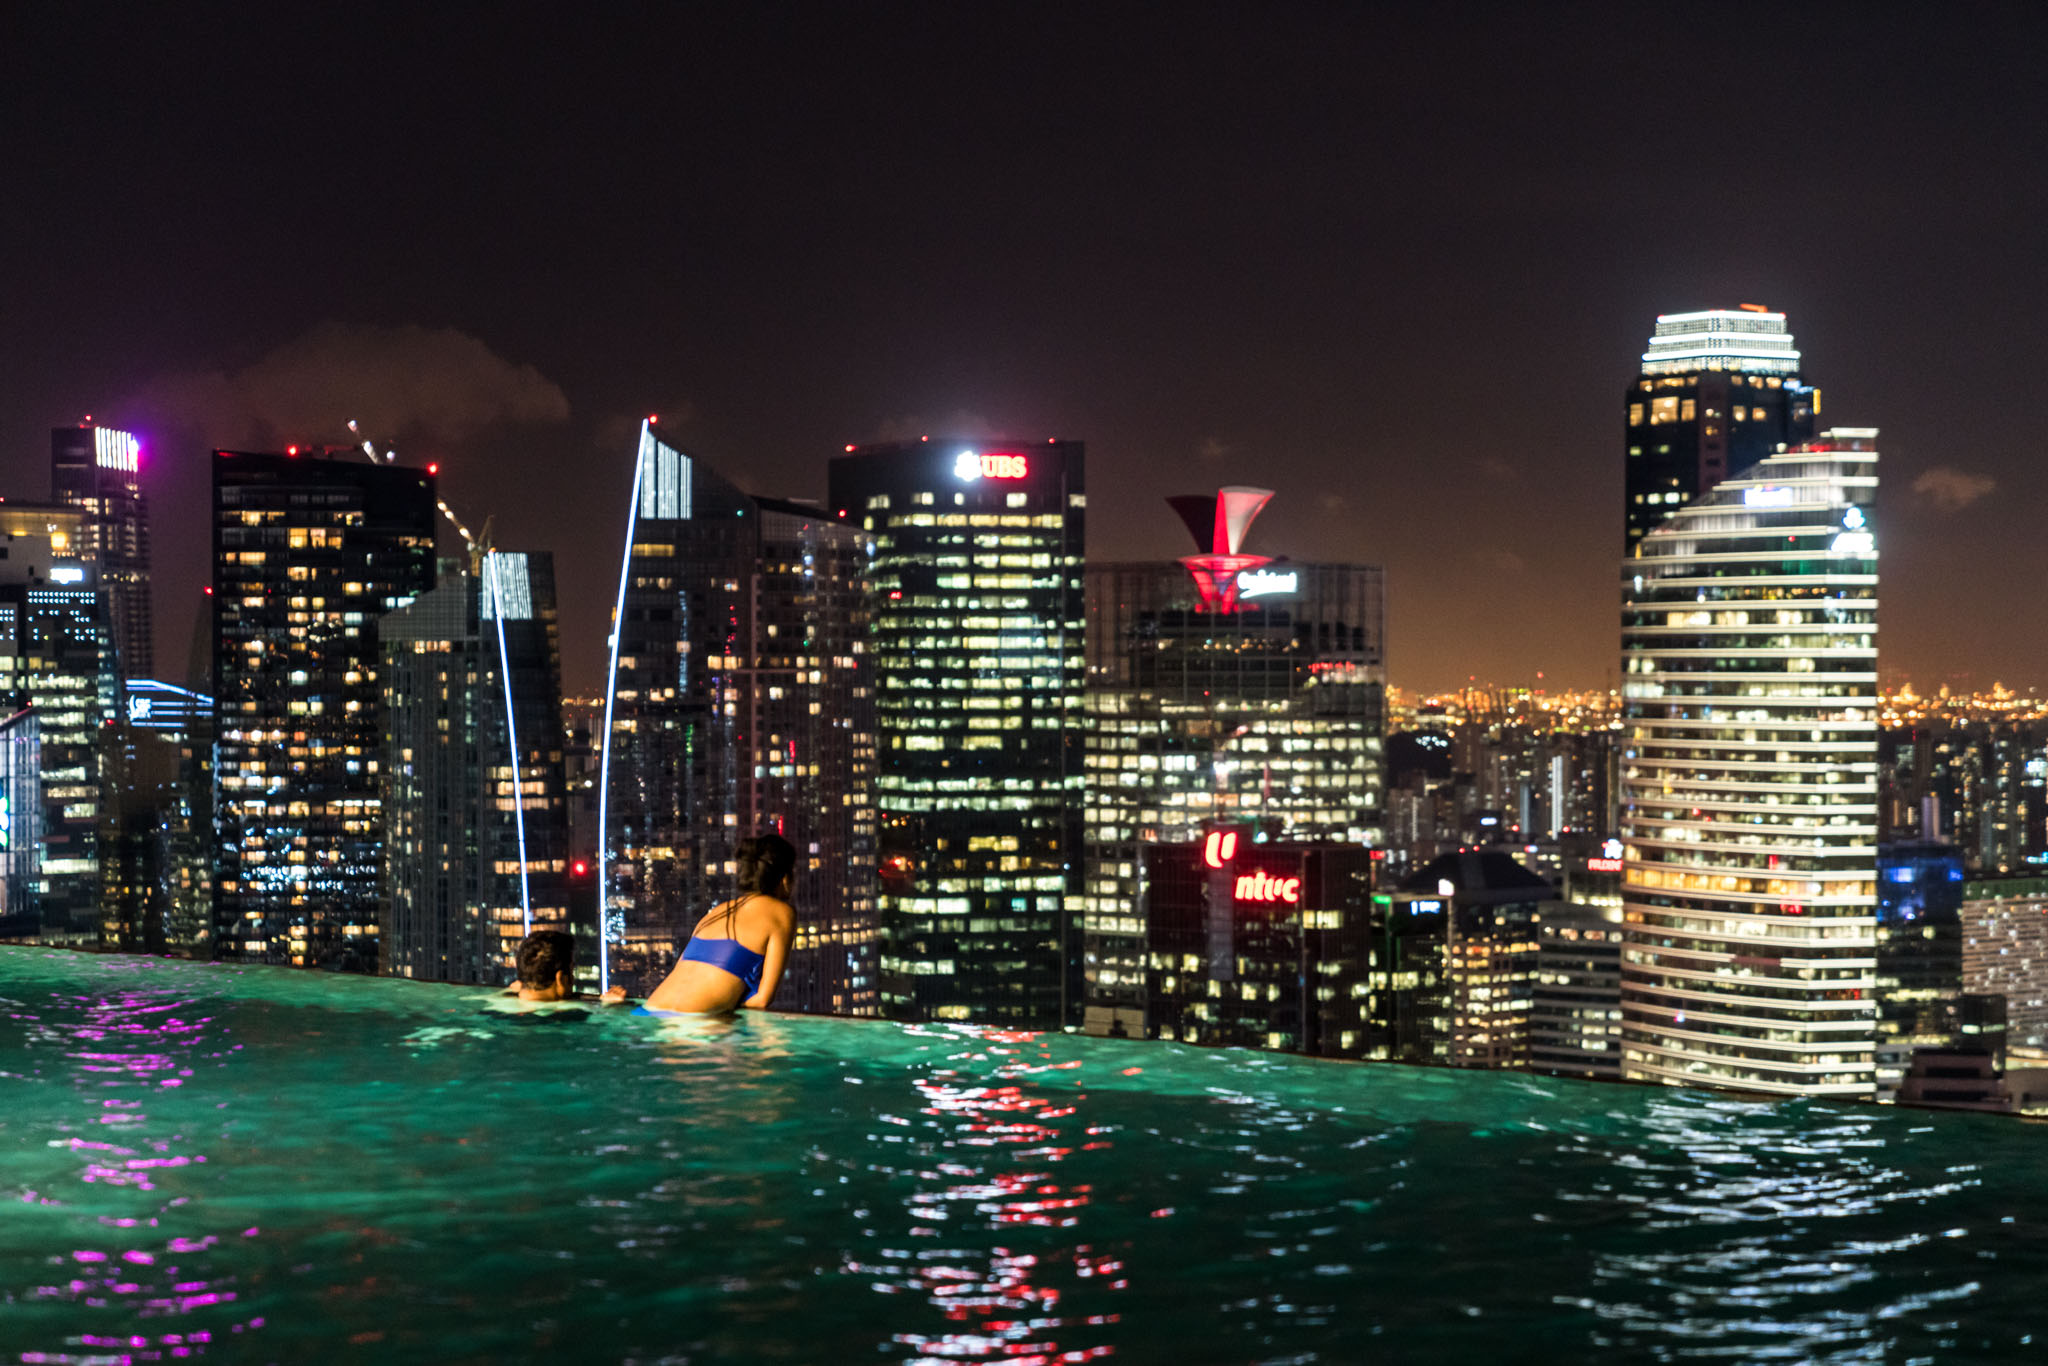 Hotel review: Marina Bay Sands Singapore